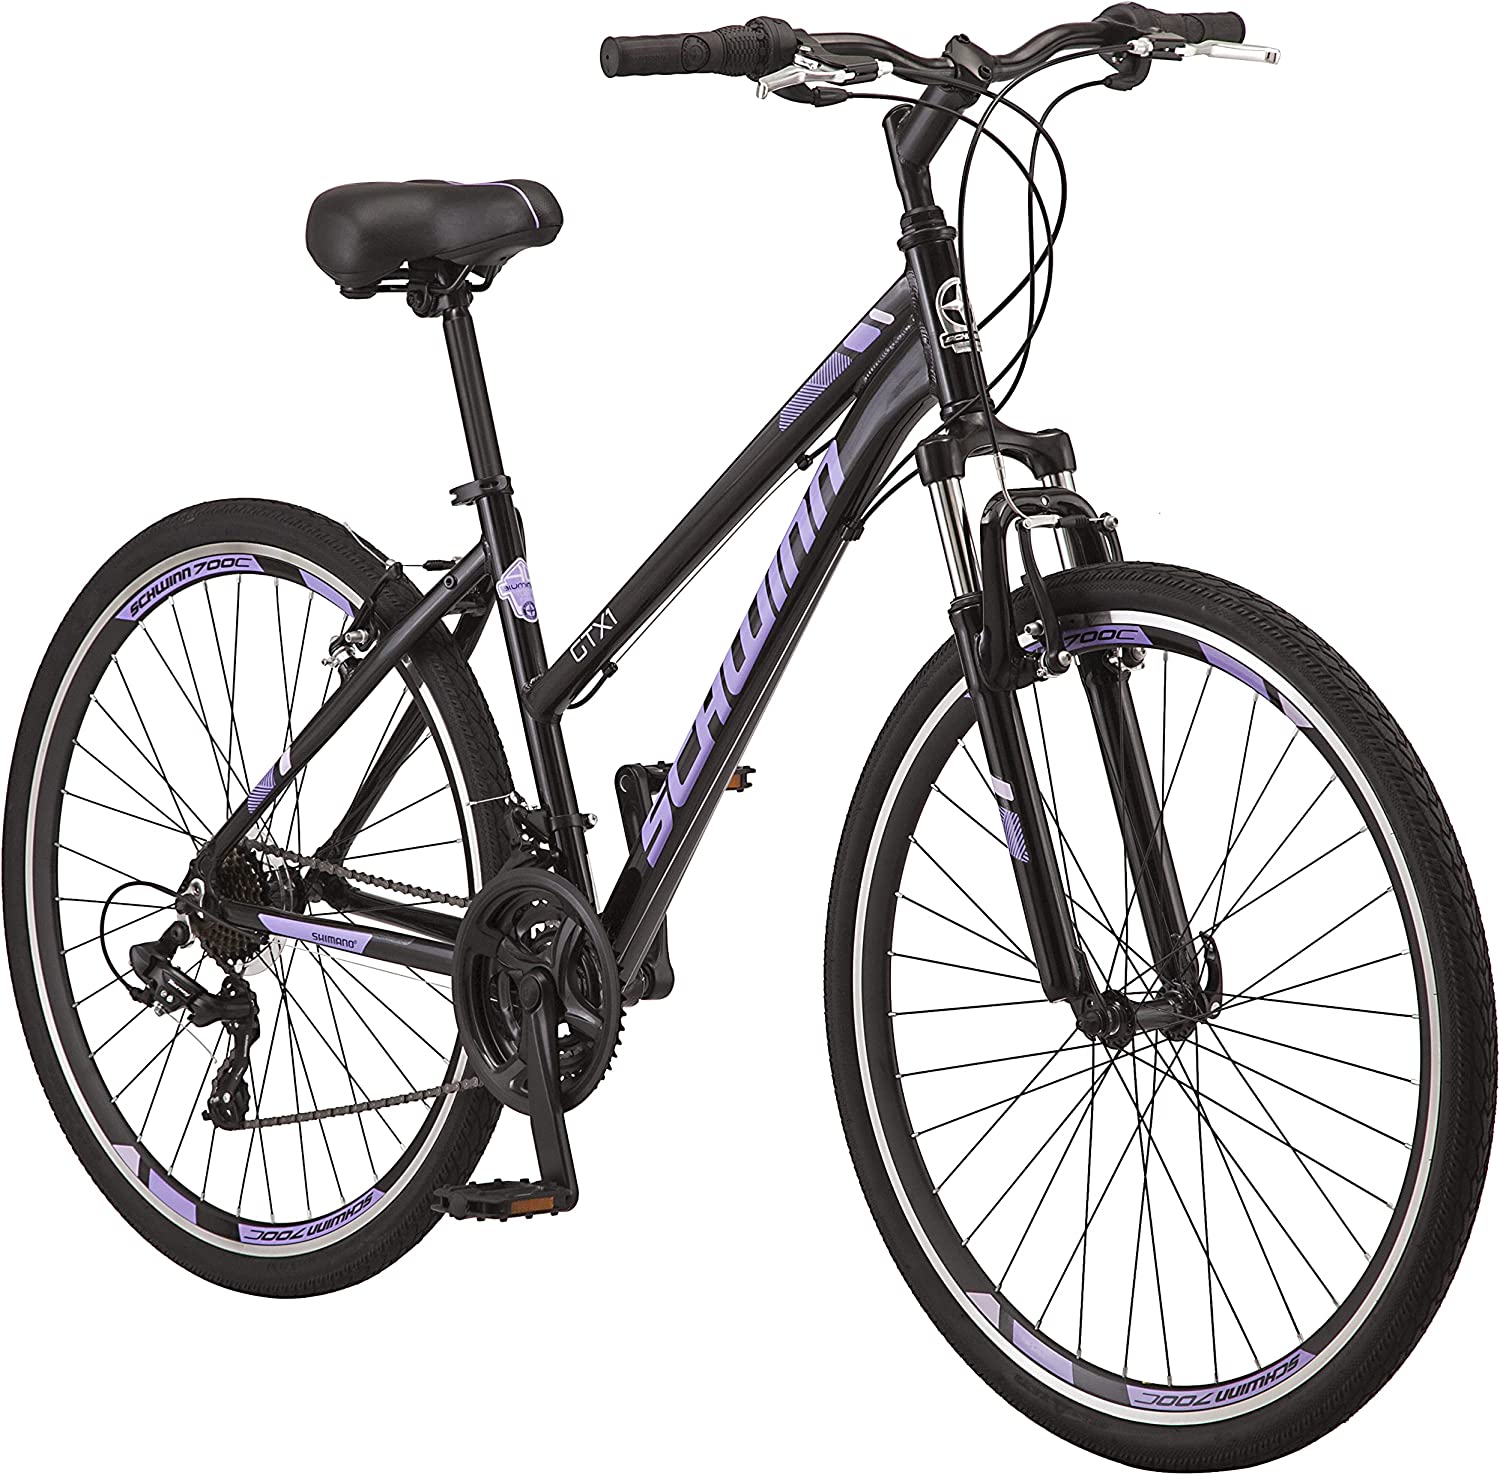 Schwinn GTX Comfort Adult Hybrid Bike, Dual Sport Bicycle, Lightweight Aluminum Frame, Multiple Colors